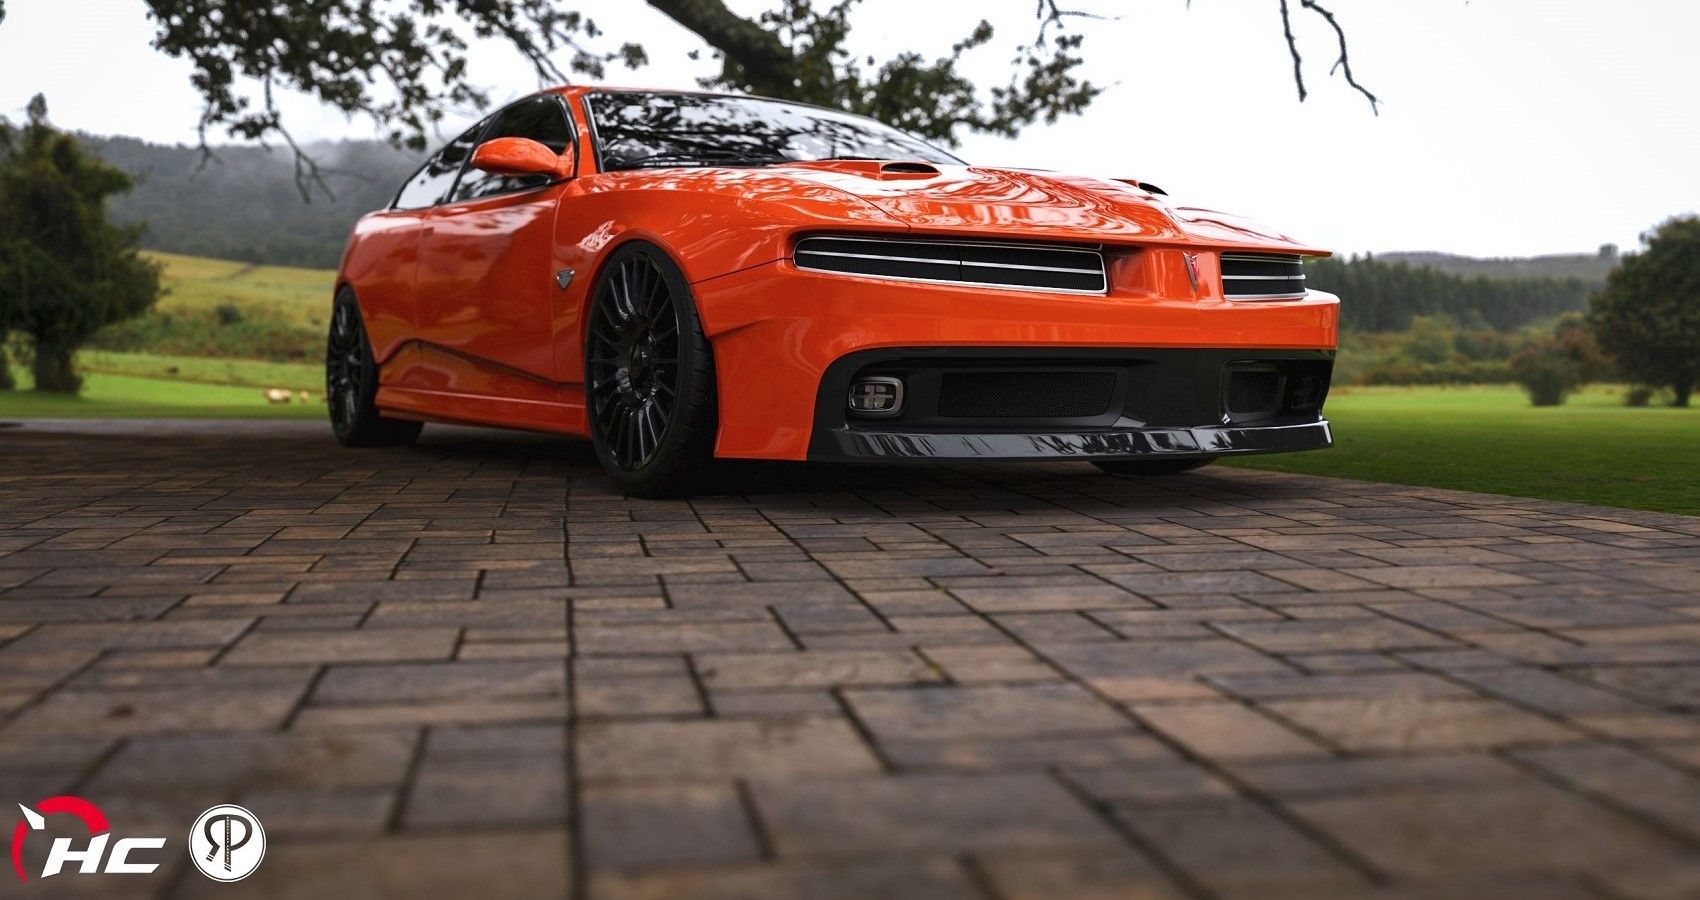 Modern Day Pontiac Orange GTO render, front quarter view at ground level